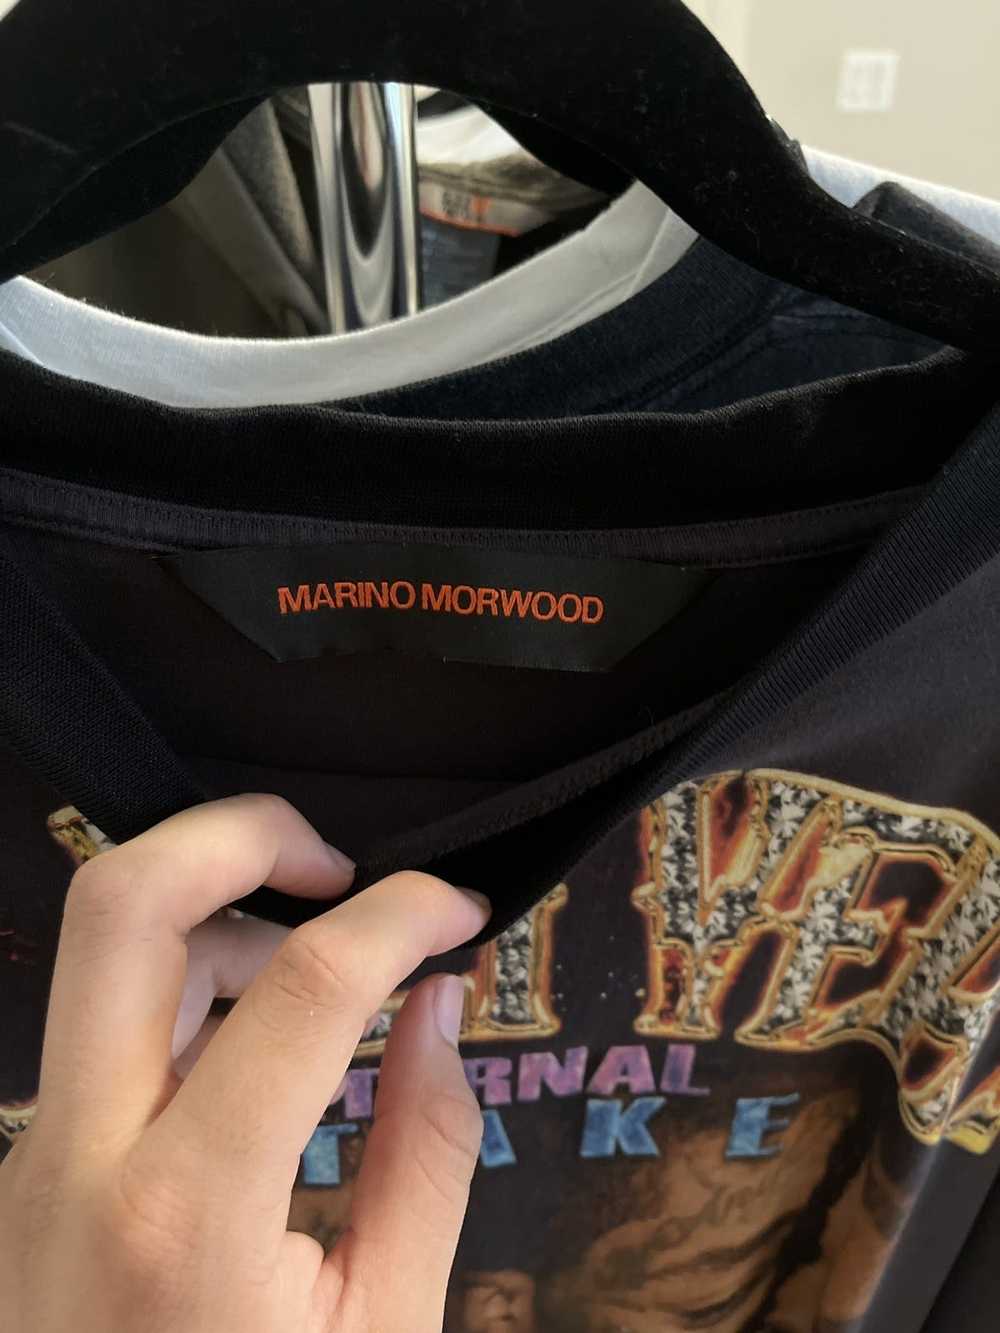 Marino Morwood Lil uzi morwood shirt - image 3